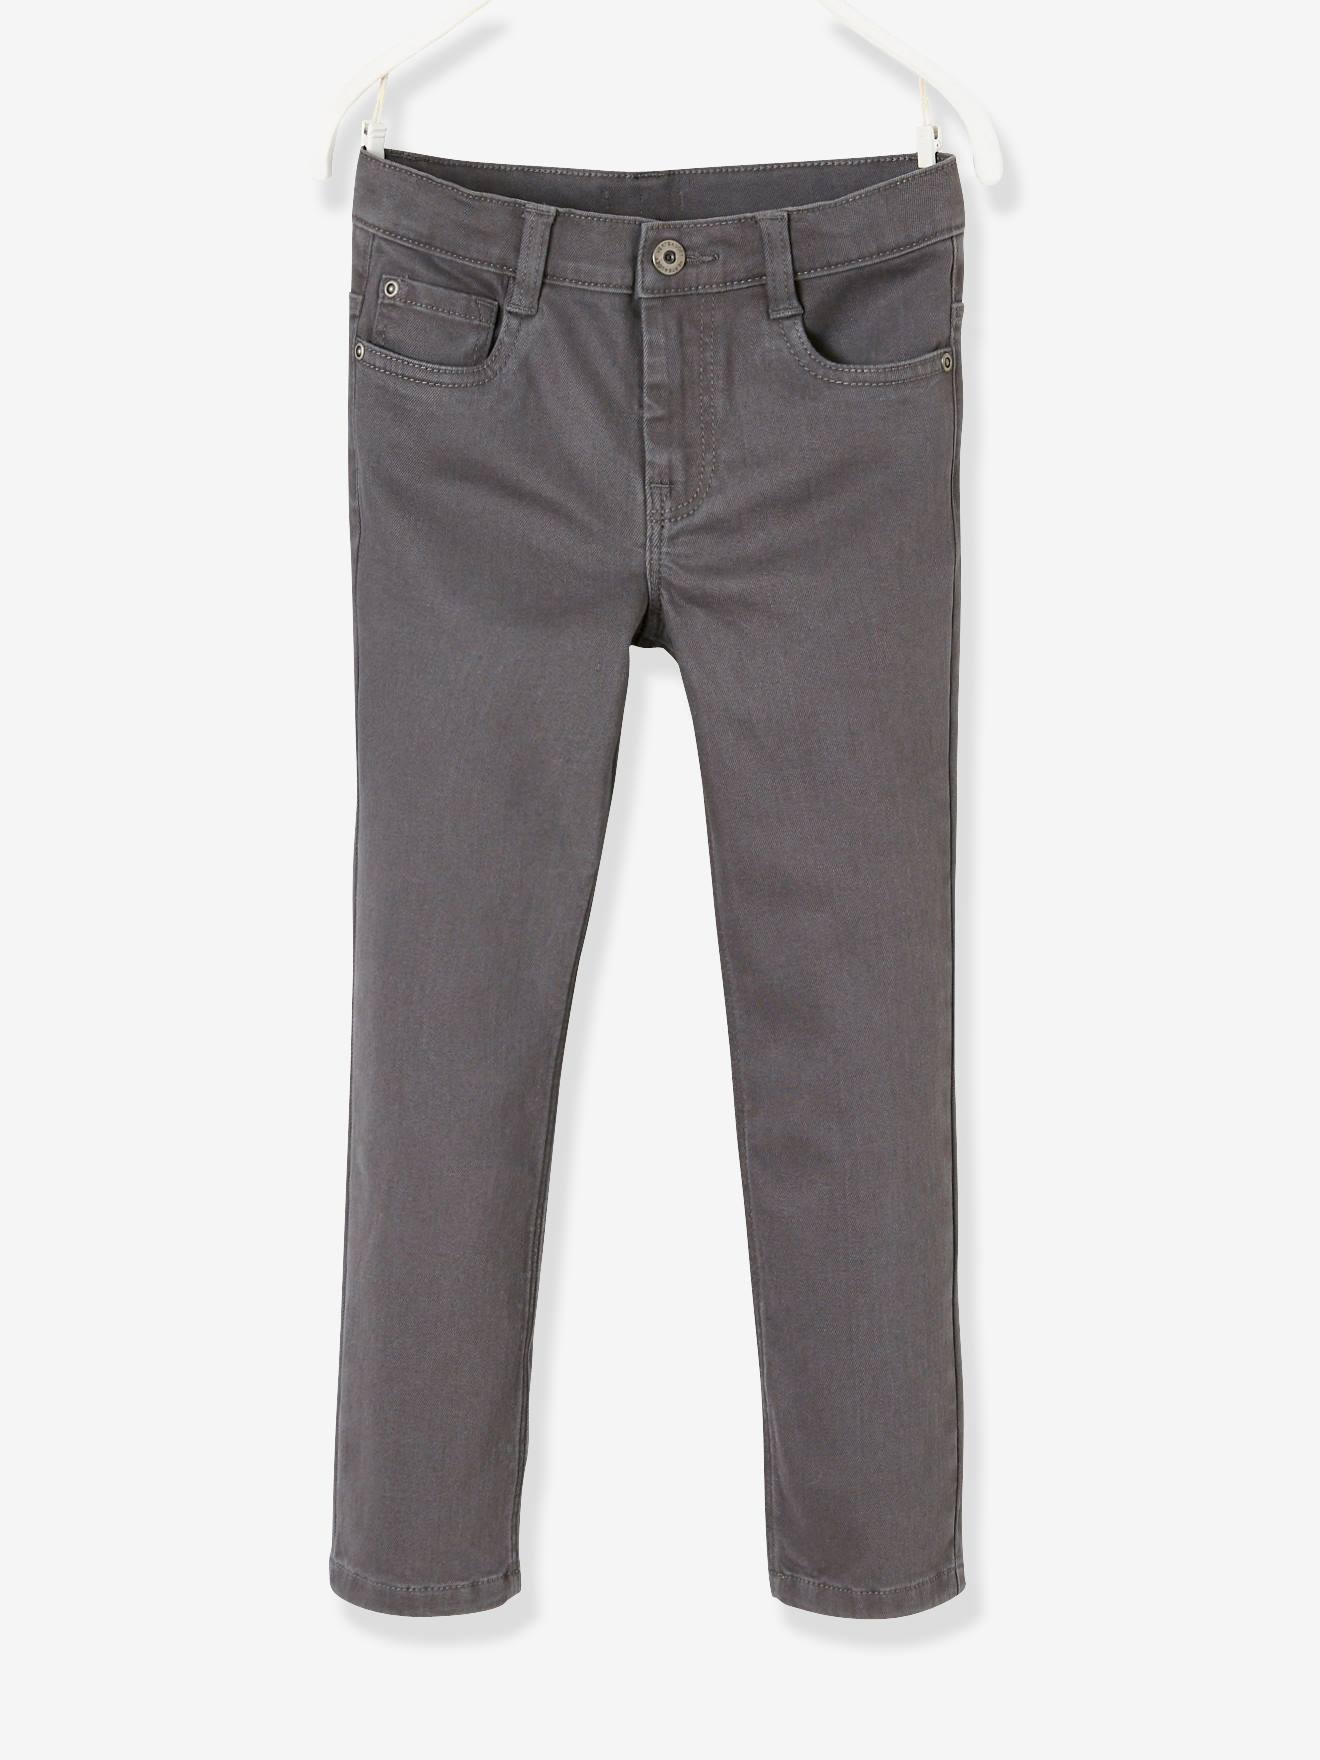 شلوار جینز پسرانه 29540 سایز 2 تا 12 سال